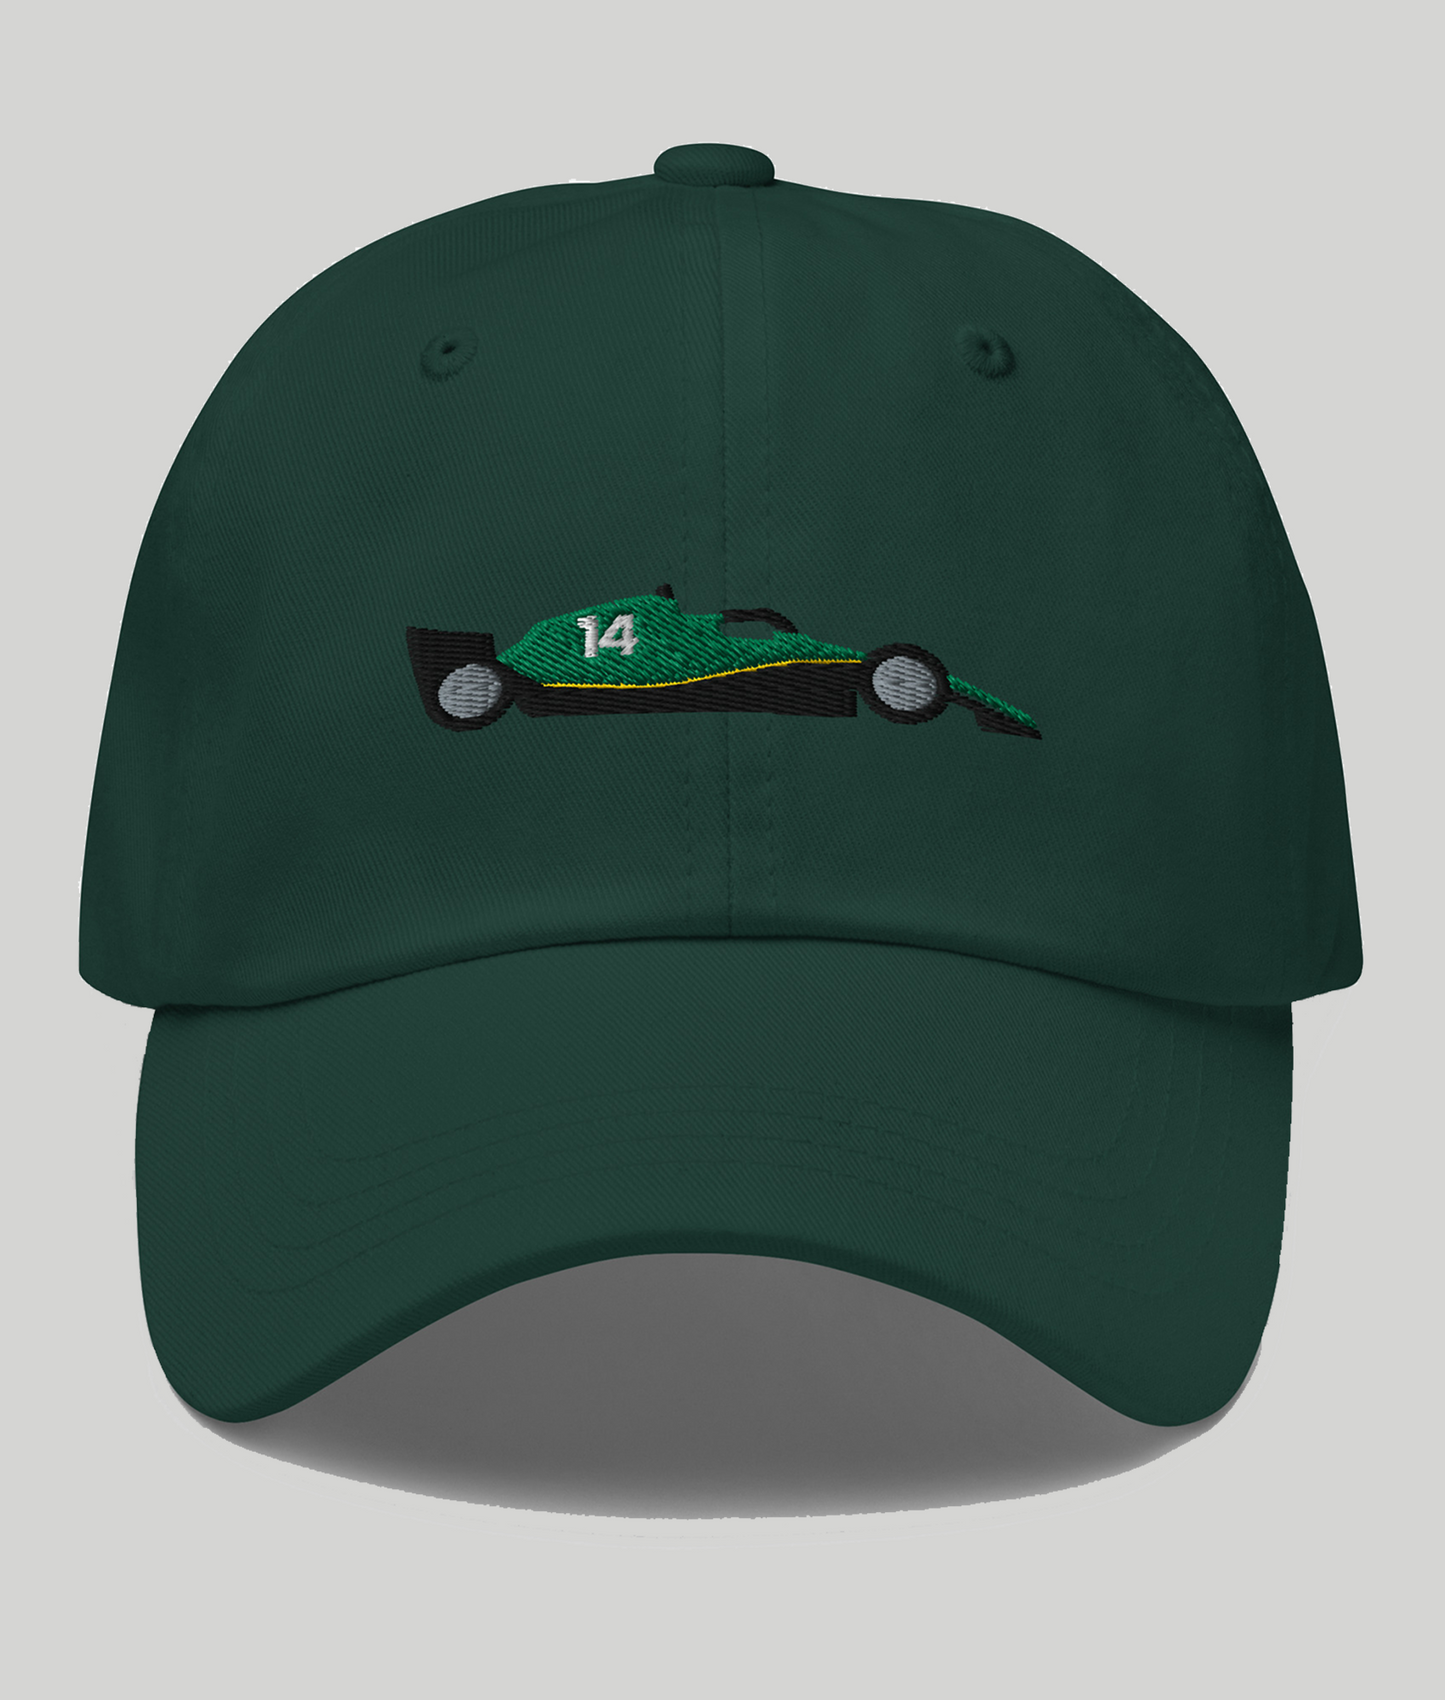 embroidered aston martin f1 car green hat